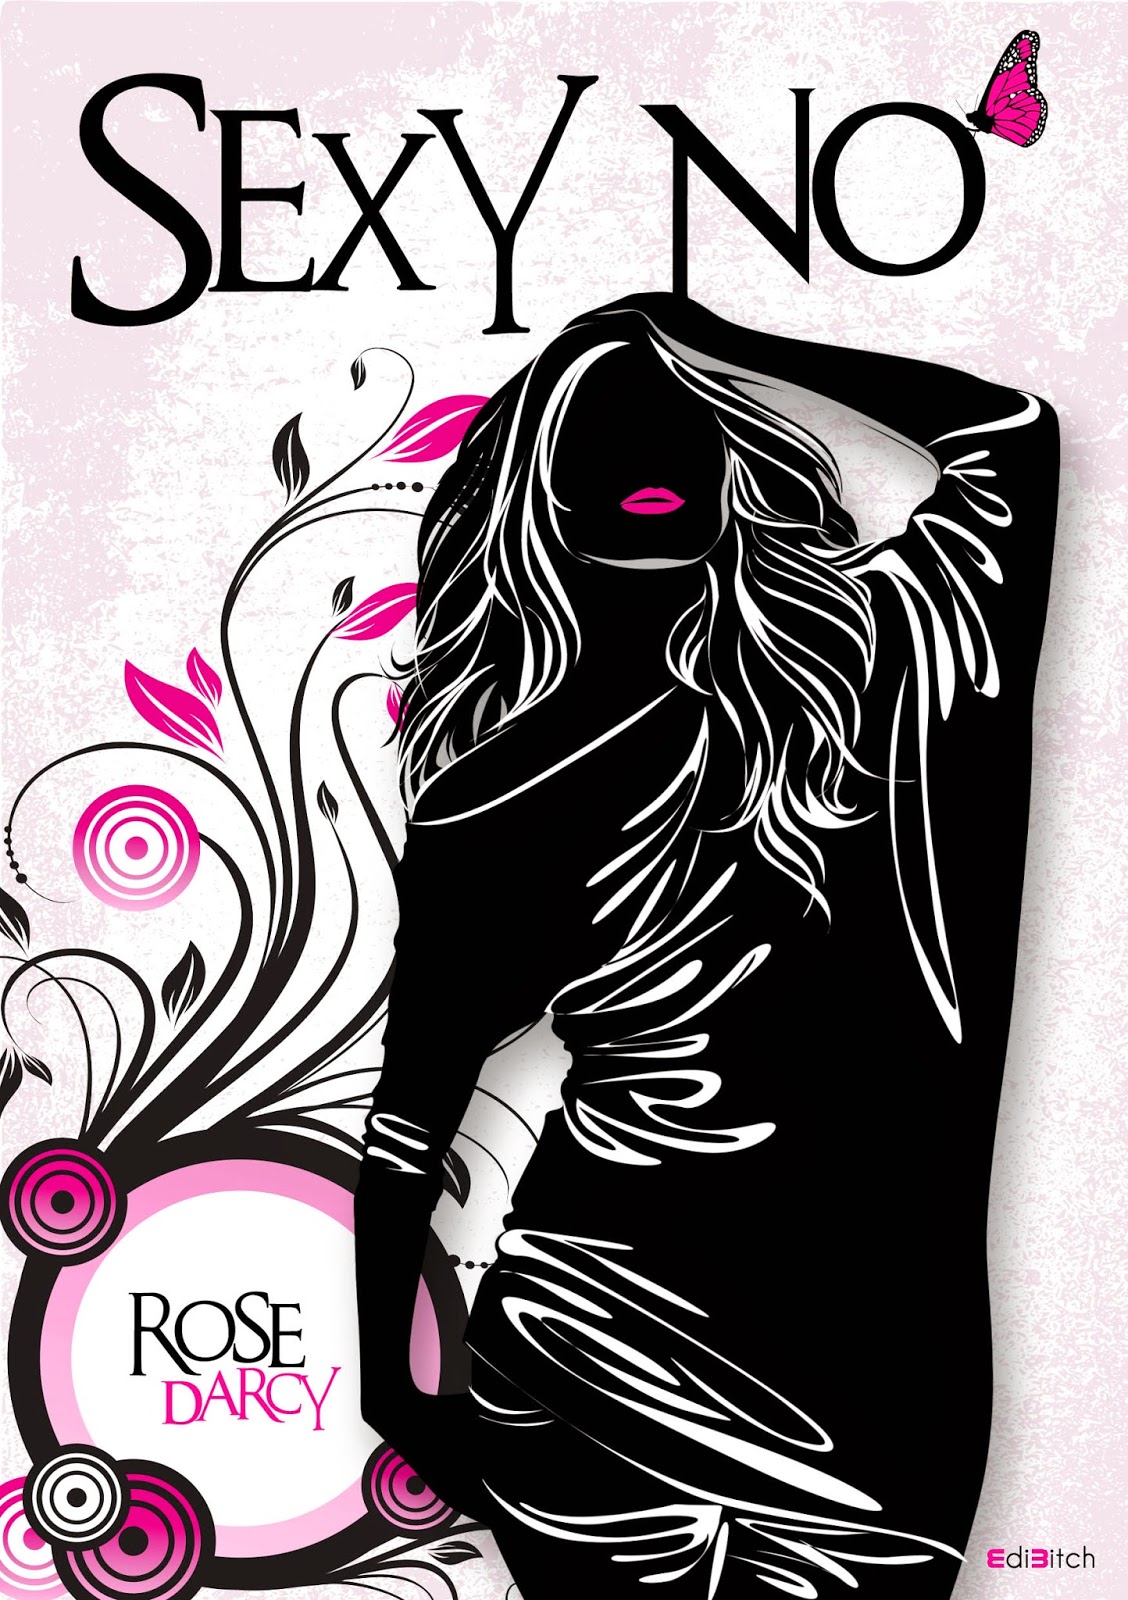 http://passion-d-ecrire.blogspot.fr/2015/04/critique-litteraire-sexy-no-rose-darcy.html